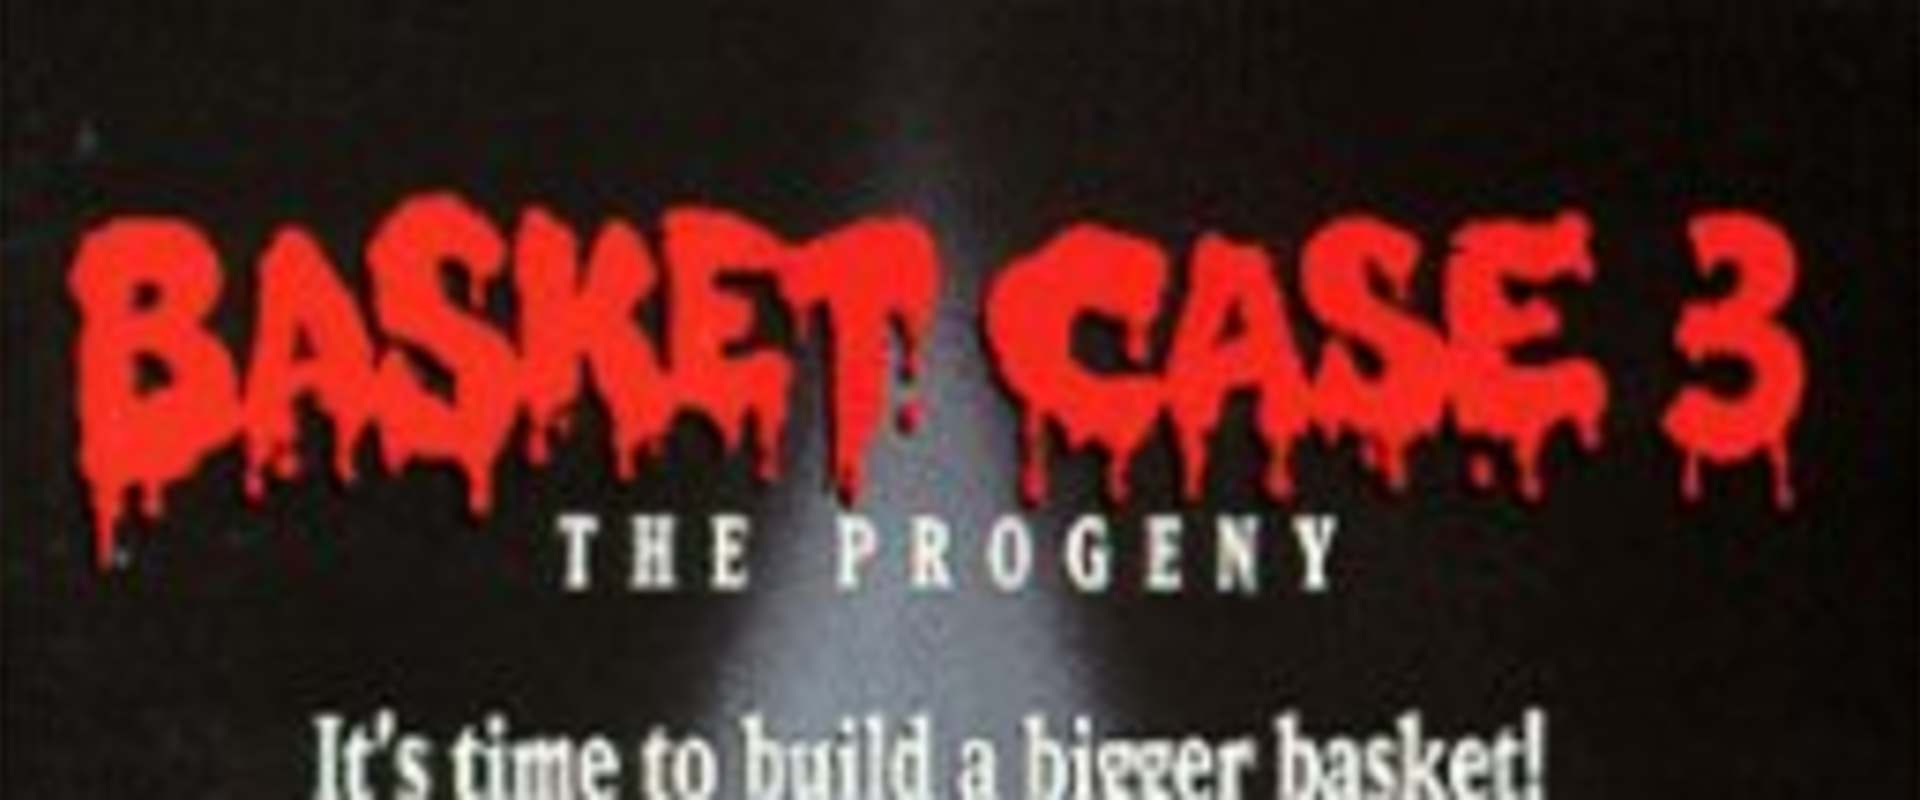 Basket Case 3: The Progeny background 2